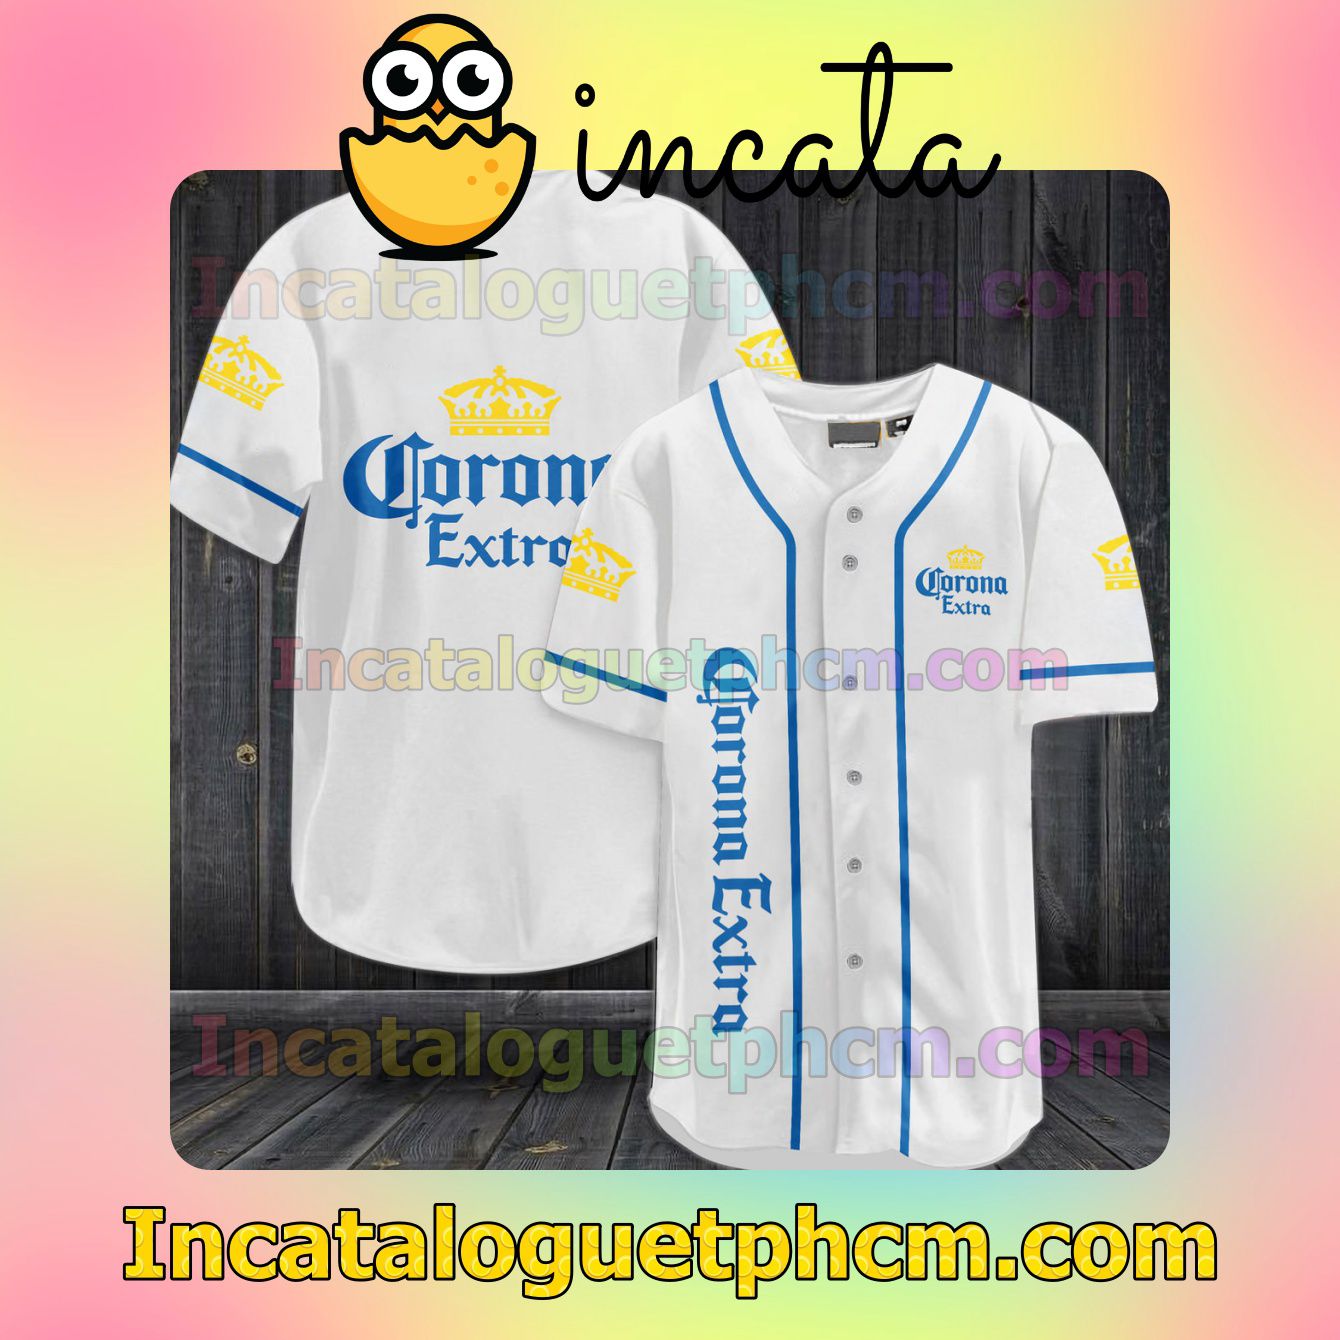 Near you Corona Extra Baseball Jersey Shirt